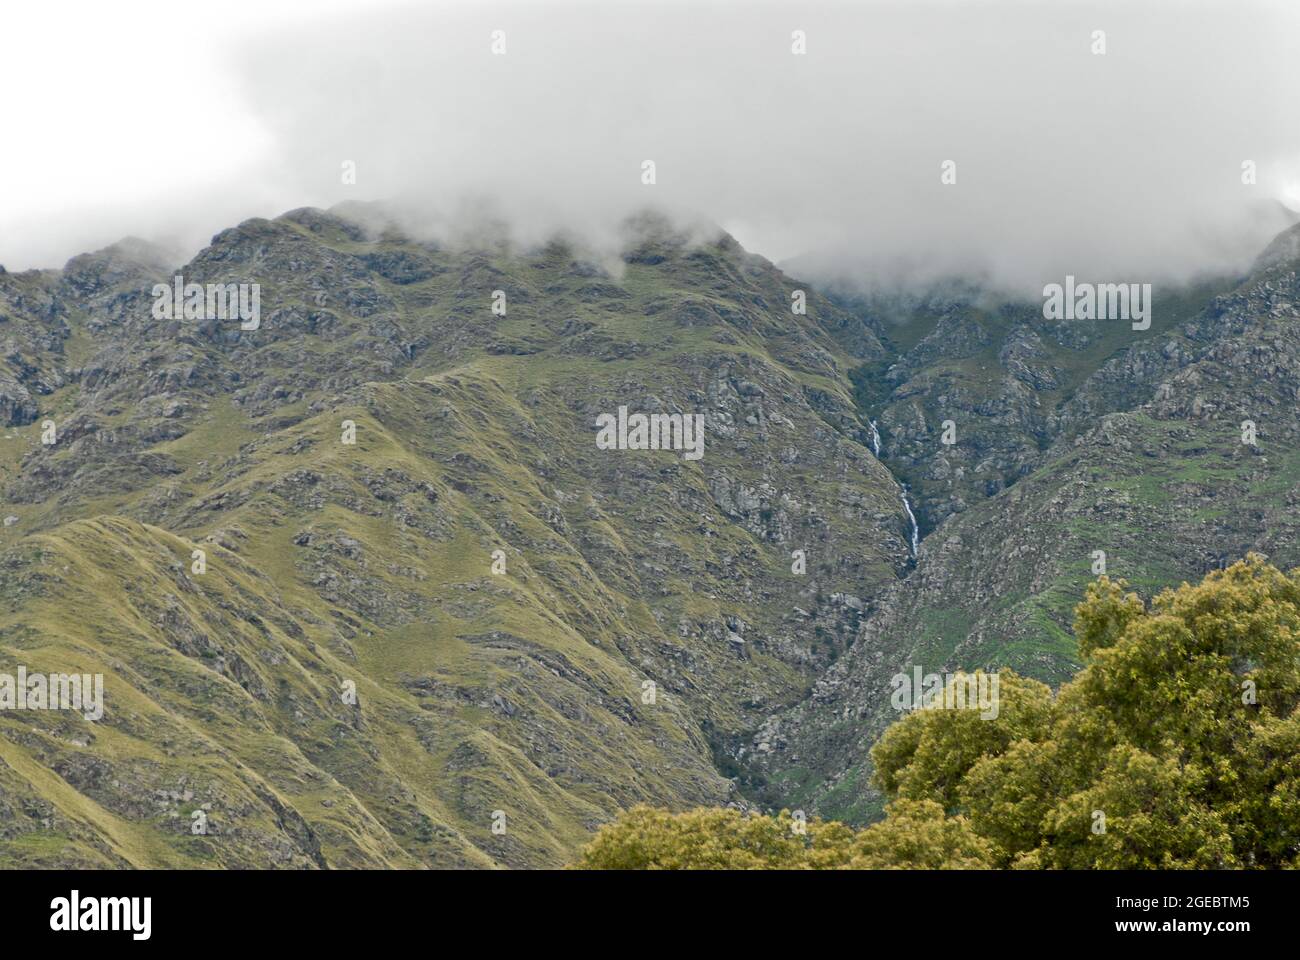 Merlo valley, San Luis, Argentina Stock Photo